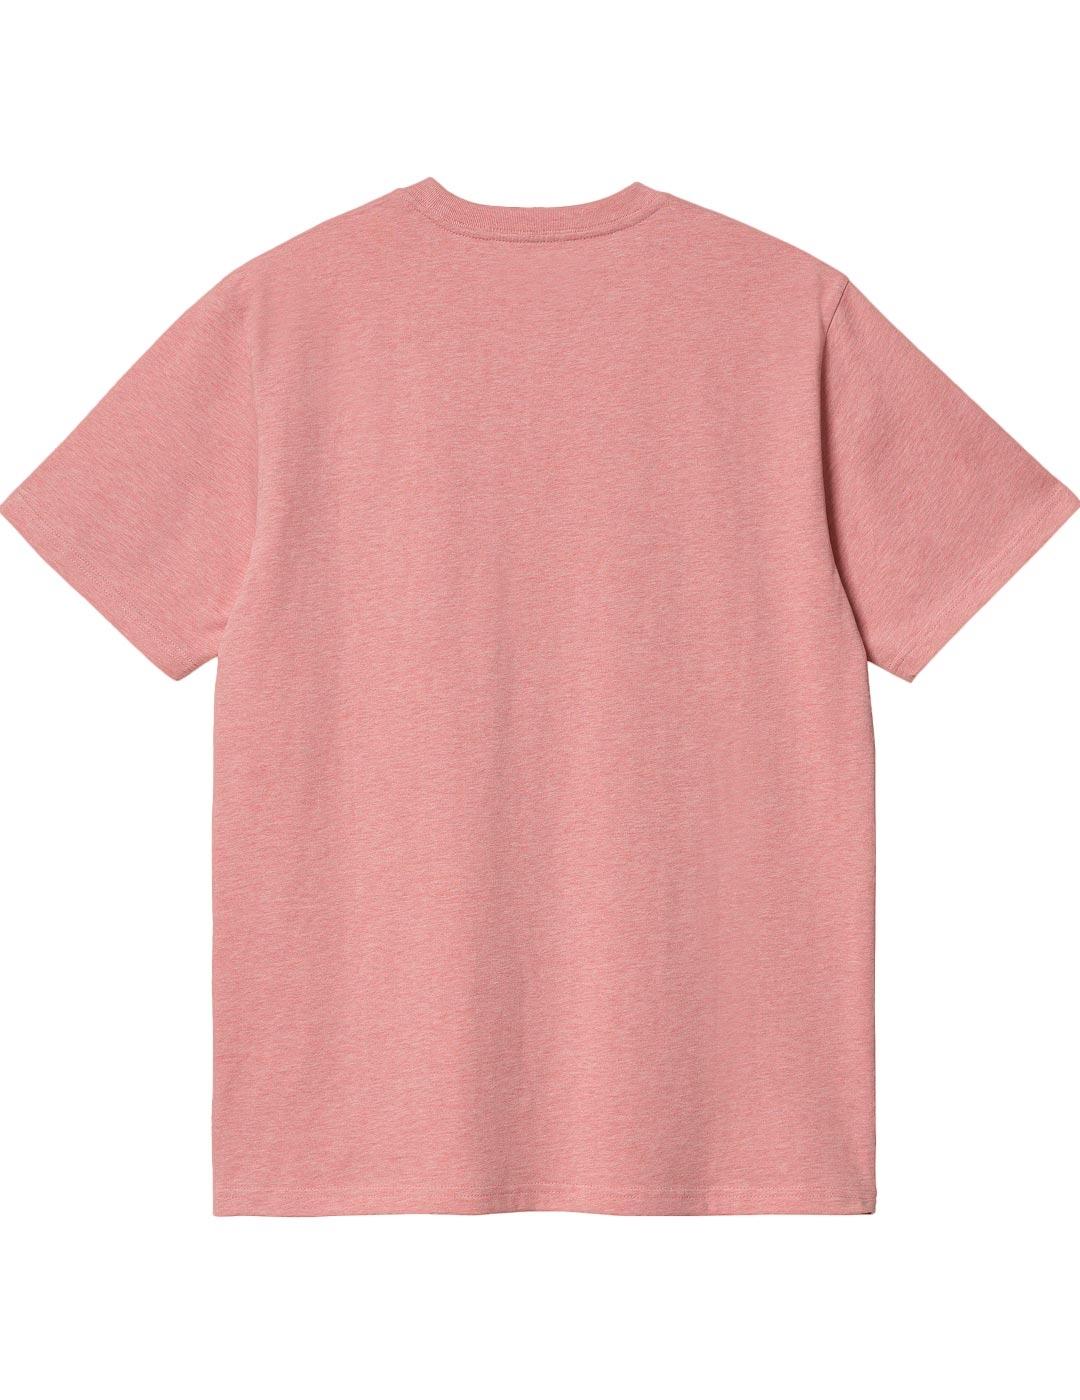 Camiseta Carhartt Pocket Rothko Pink